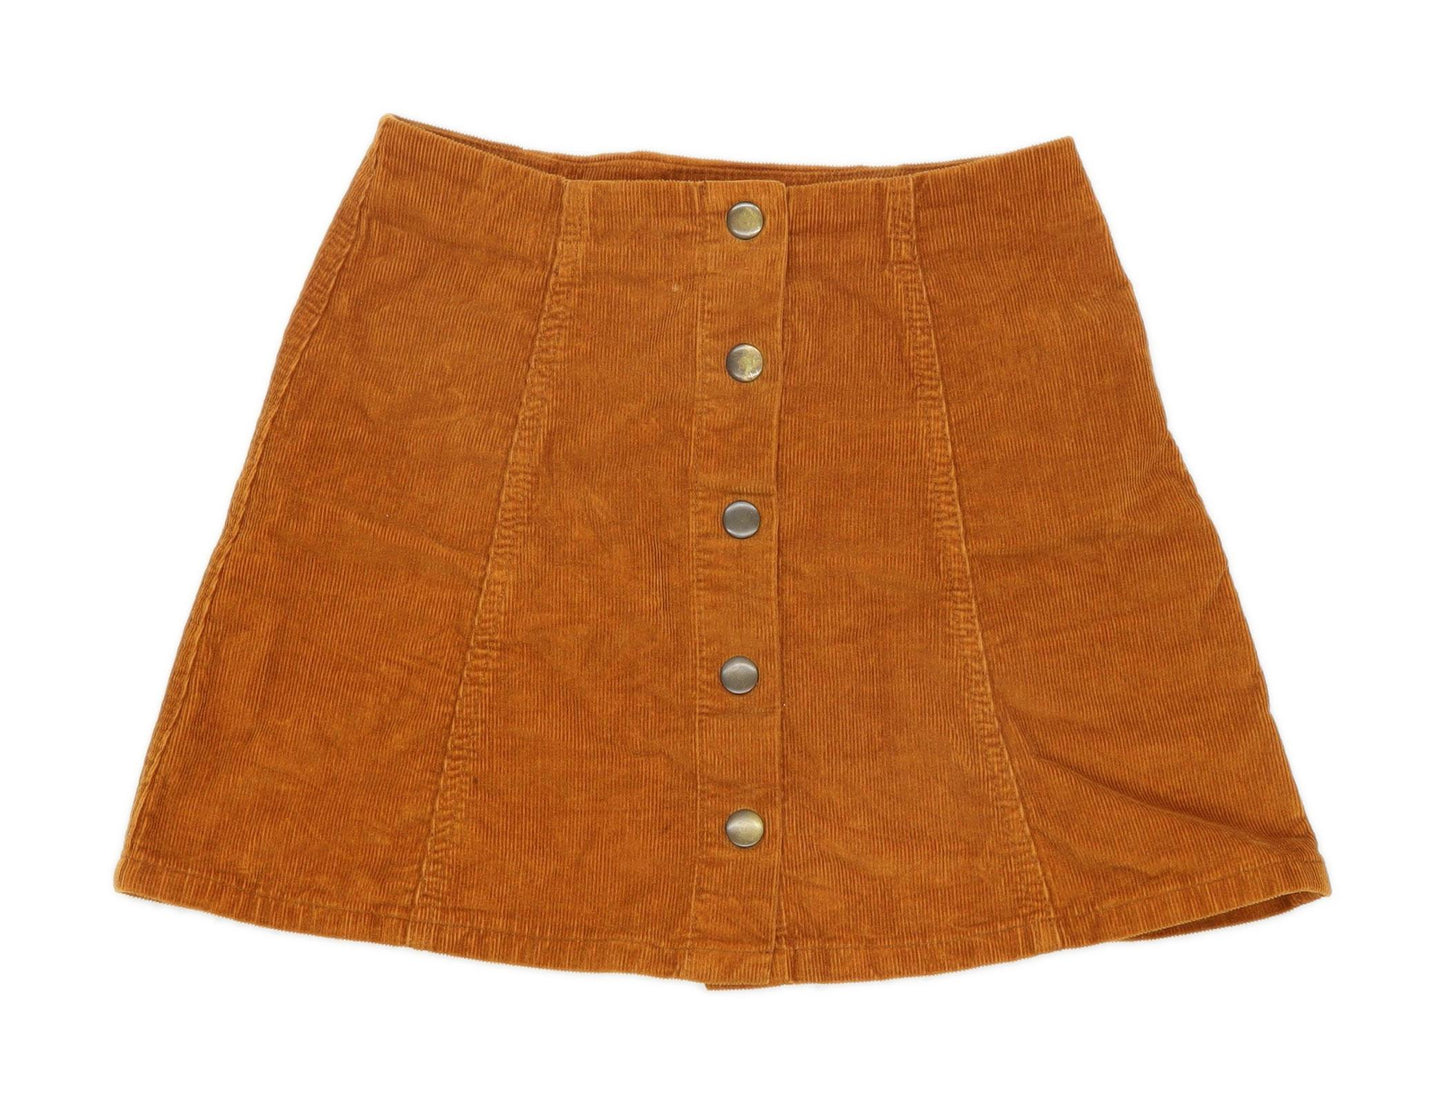 Topshop Womens Size 8 Corduroy Brown A-Line Skirt (Regular)